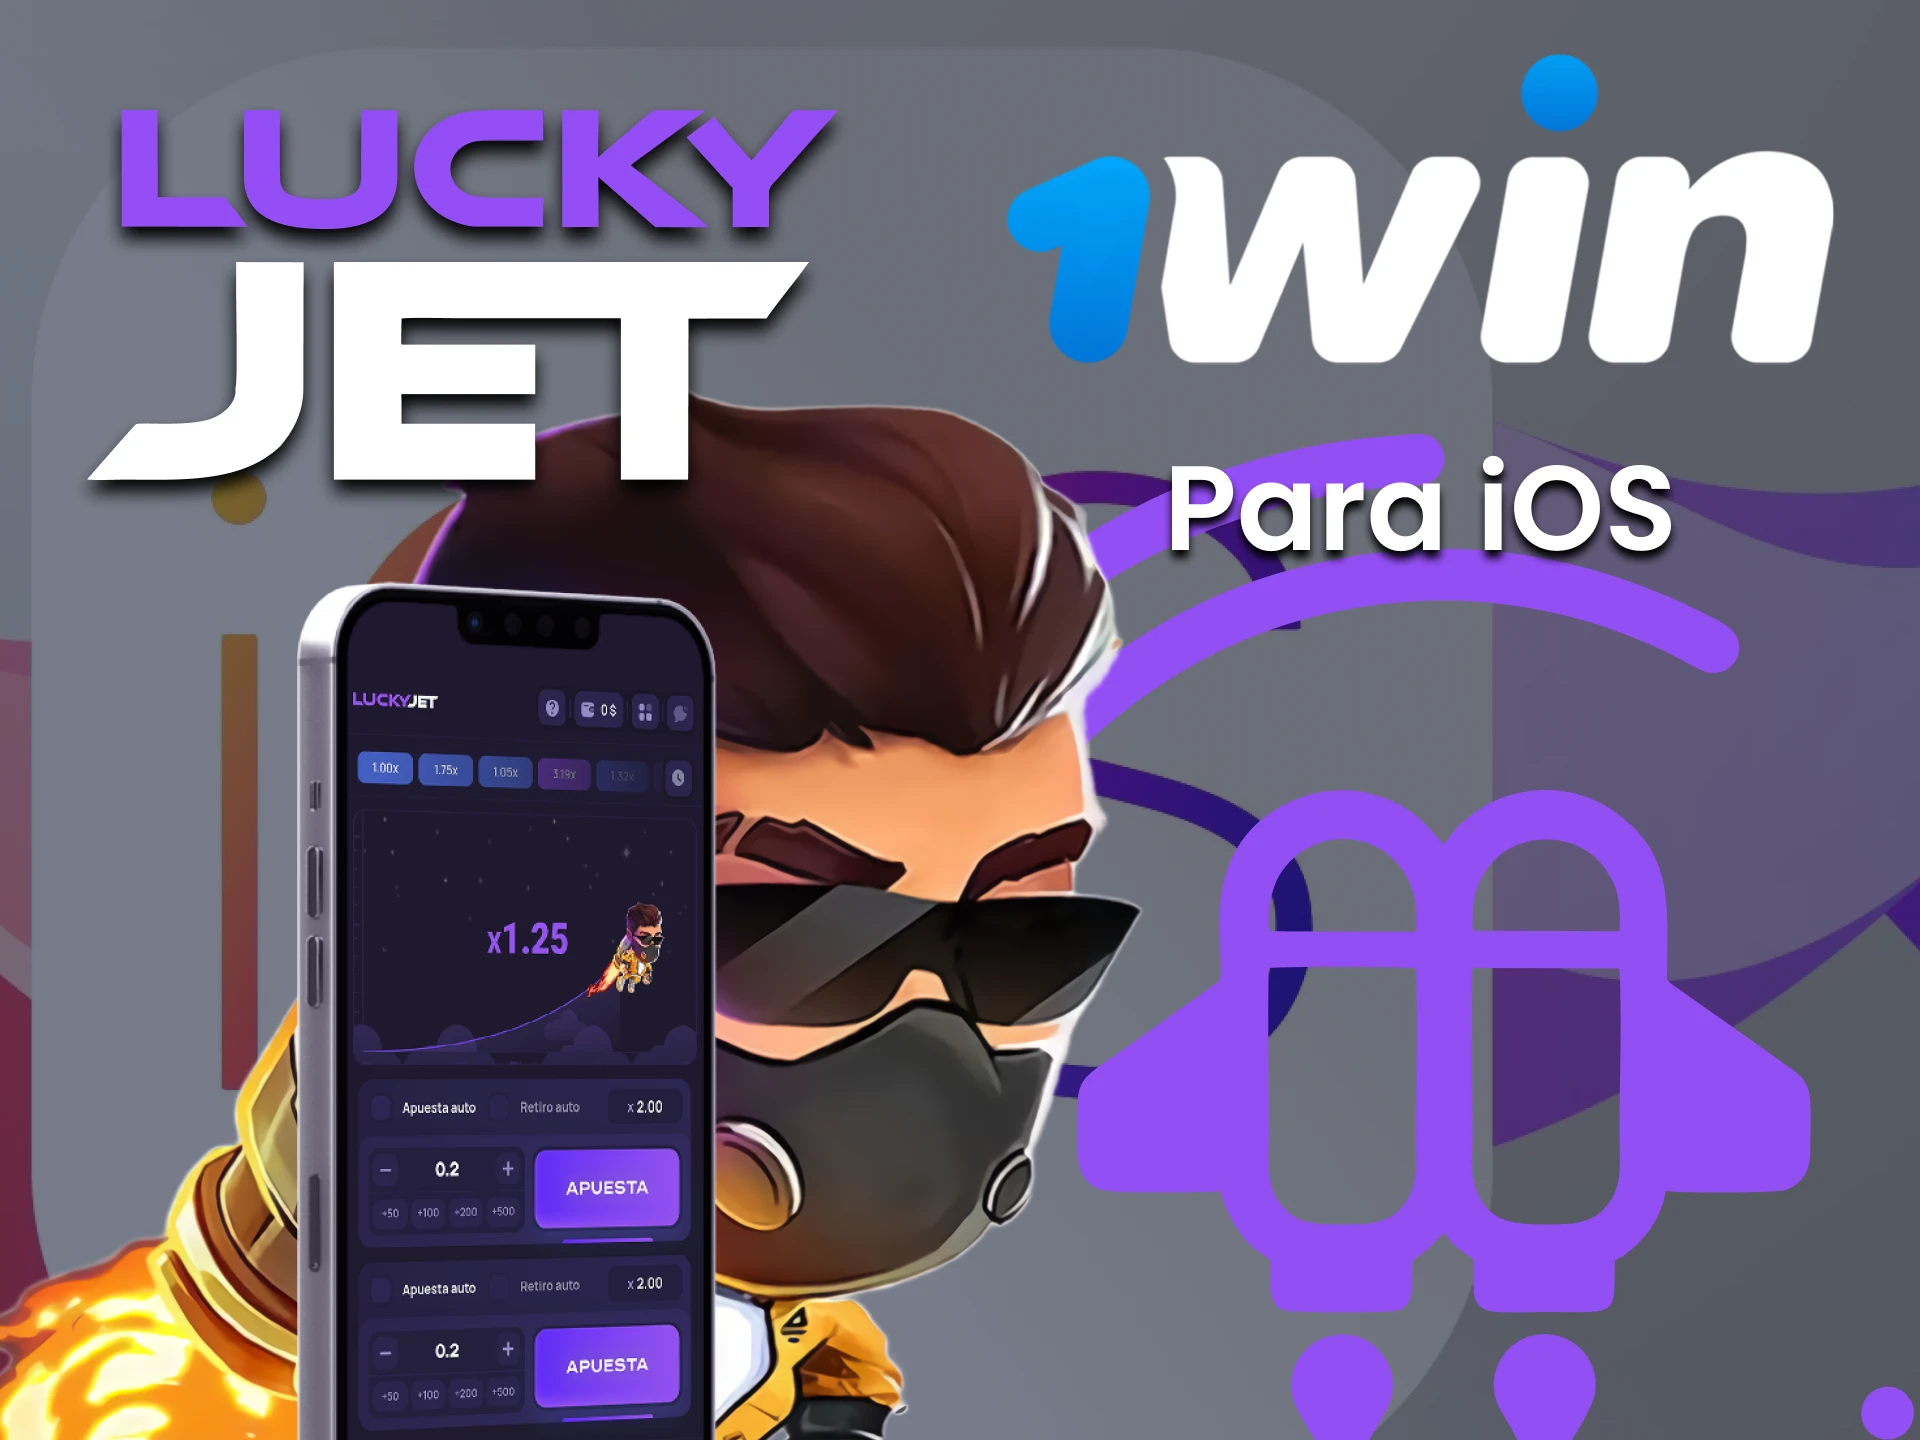 Juega Lucky Jet con la aplicación 1win para iOS.